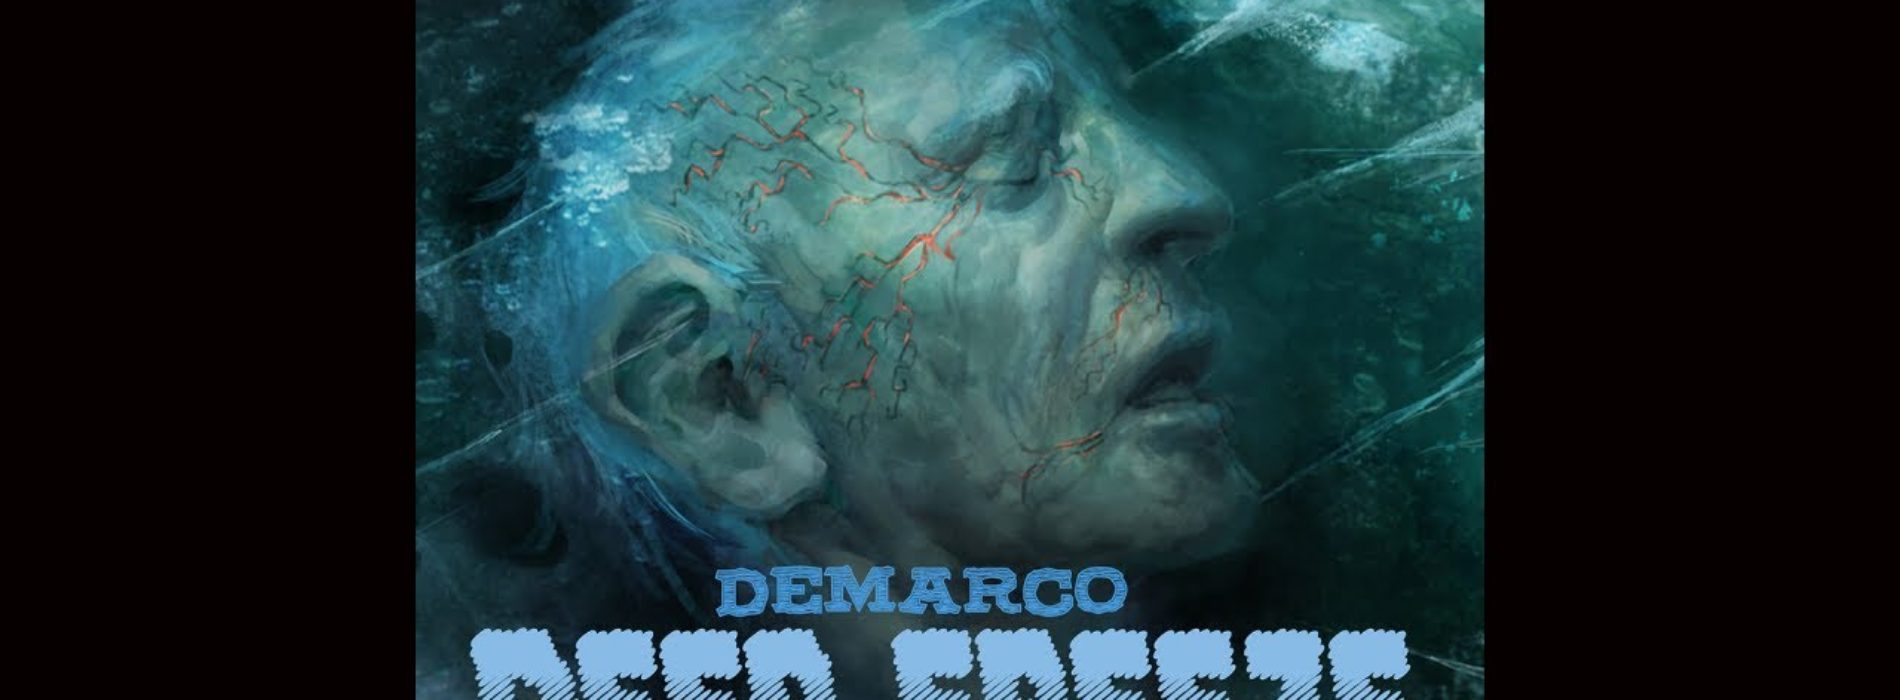 Demarco – Deep Freeze (Official Audio) – Février 2020